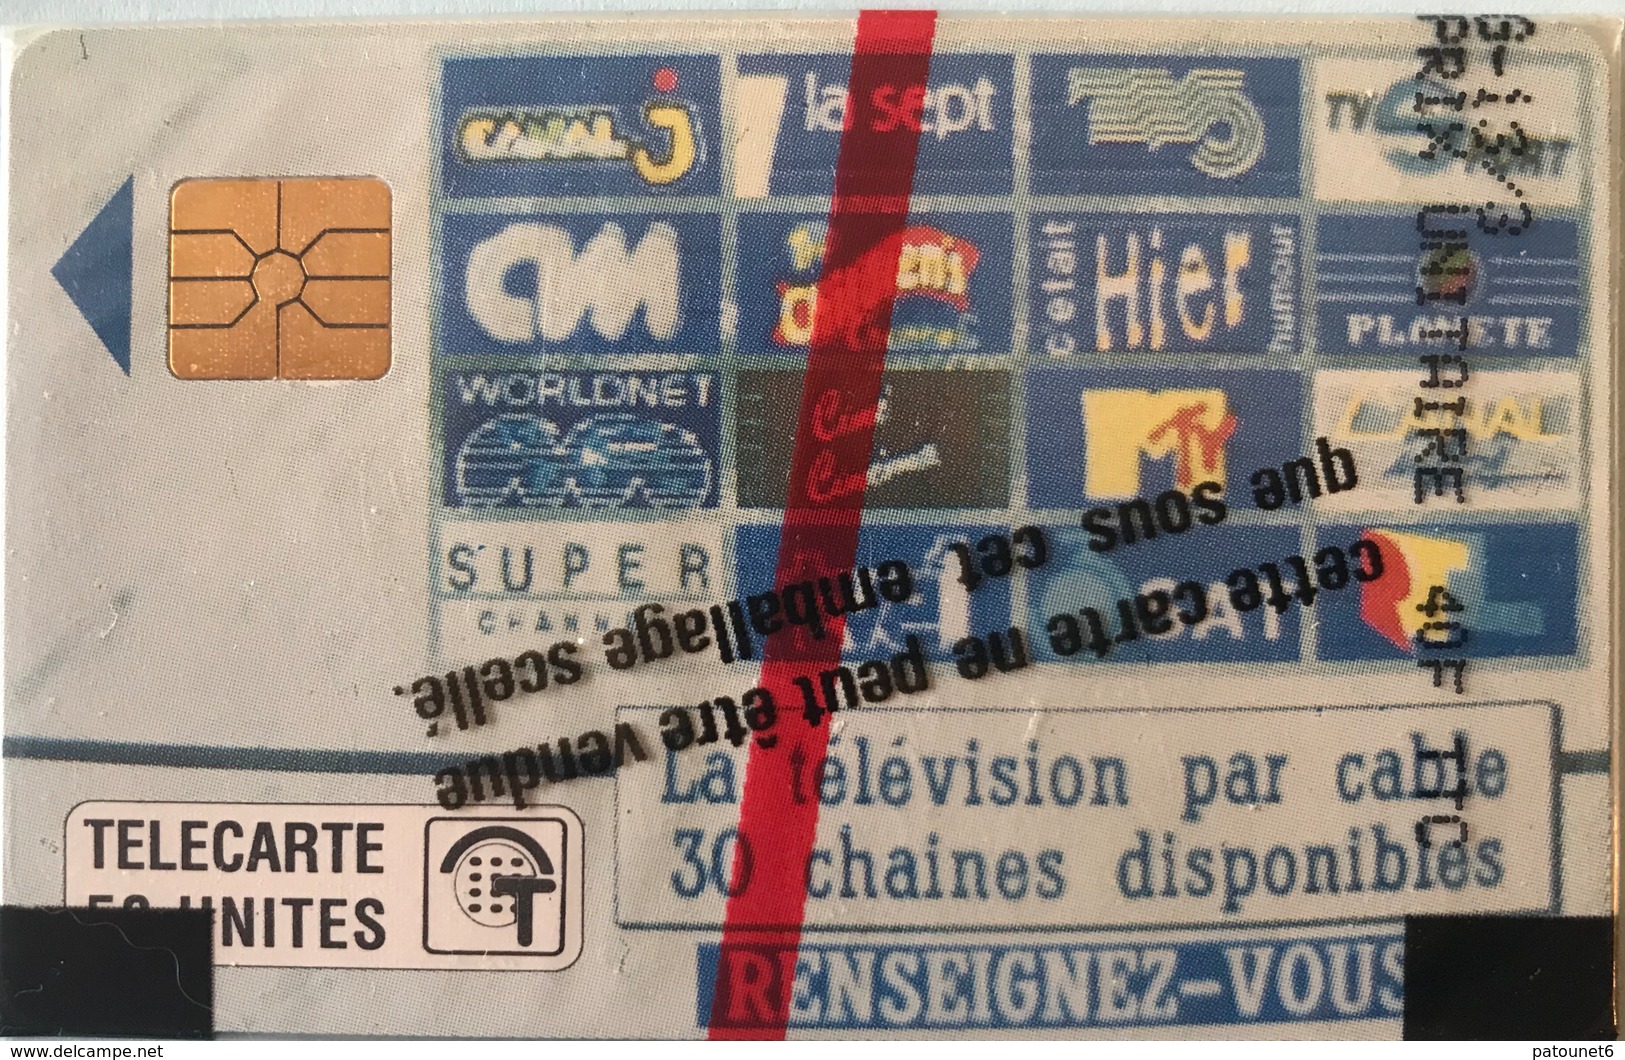 MONACO  -  Phonecard  -  MF 12  -  Télé Câblée  -  50 Unités  -  Neuve - Monaco